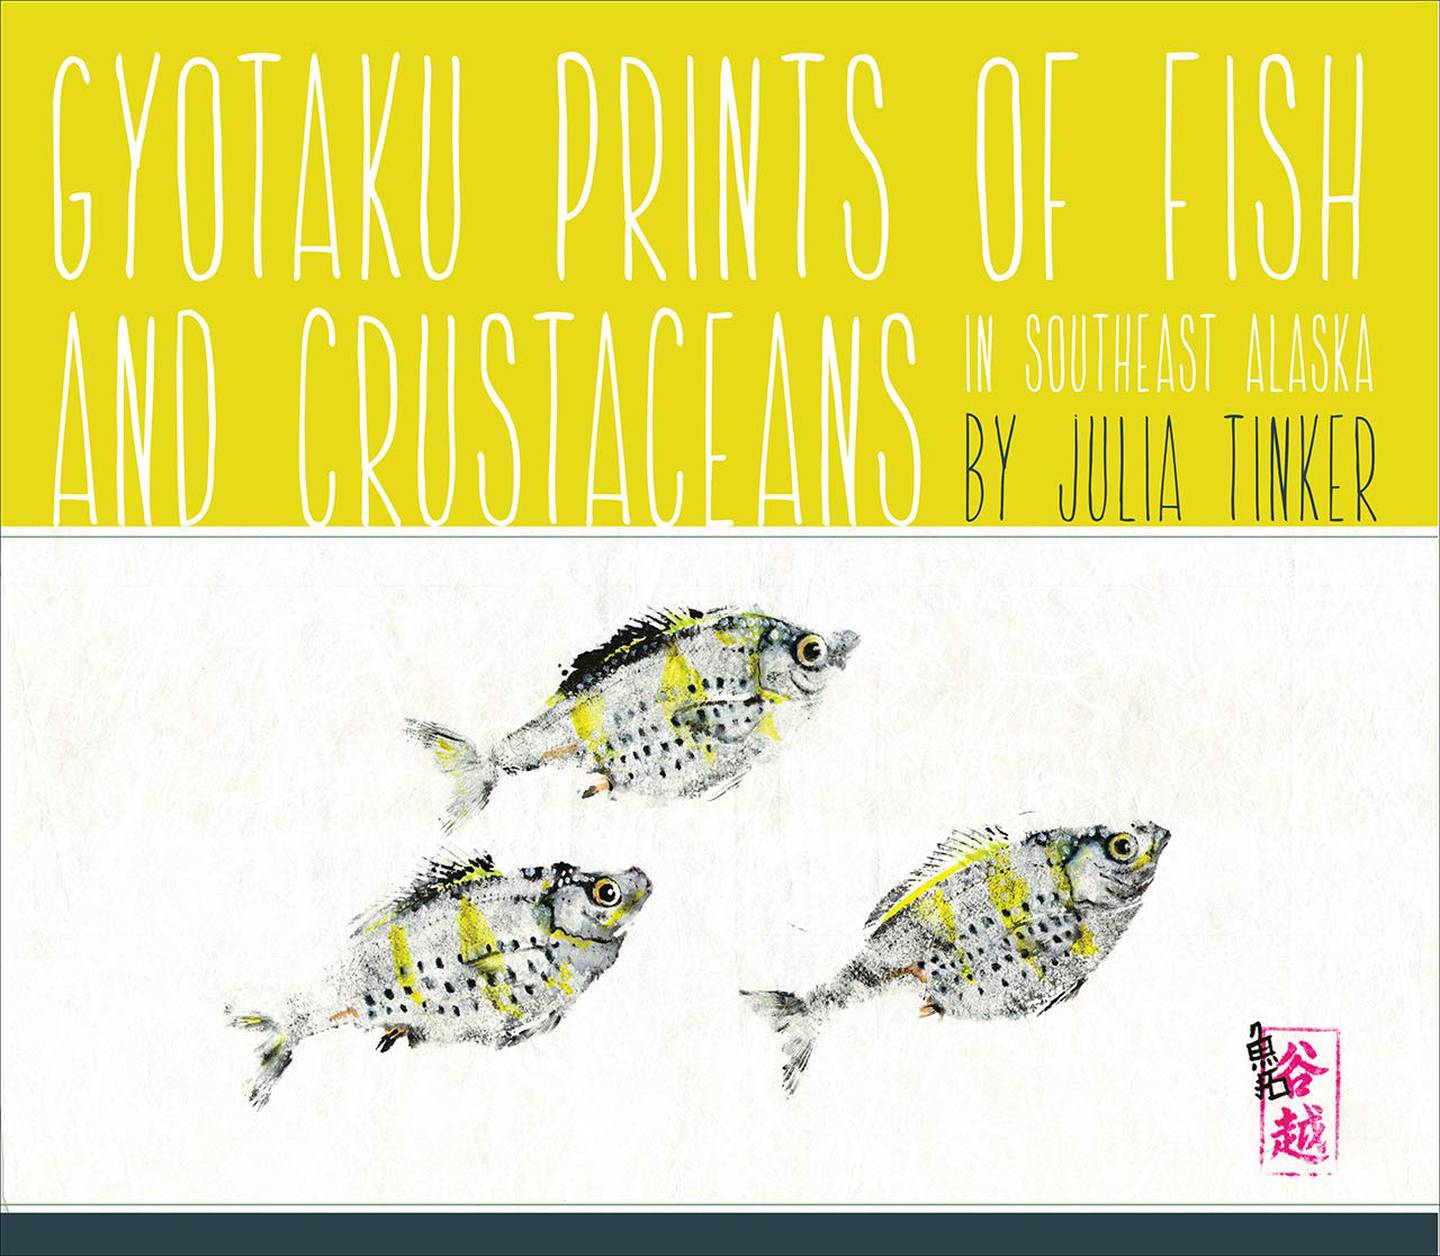 Gyotaku Prints of Fish and Crustaceans in Southeast Alaska